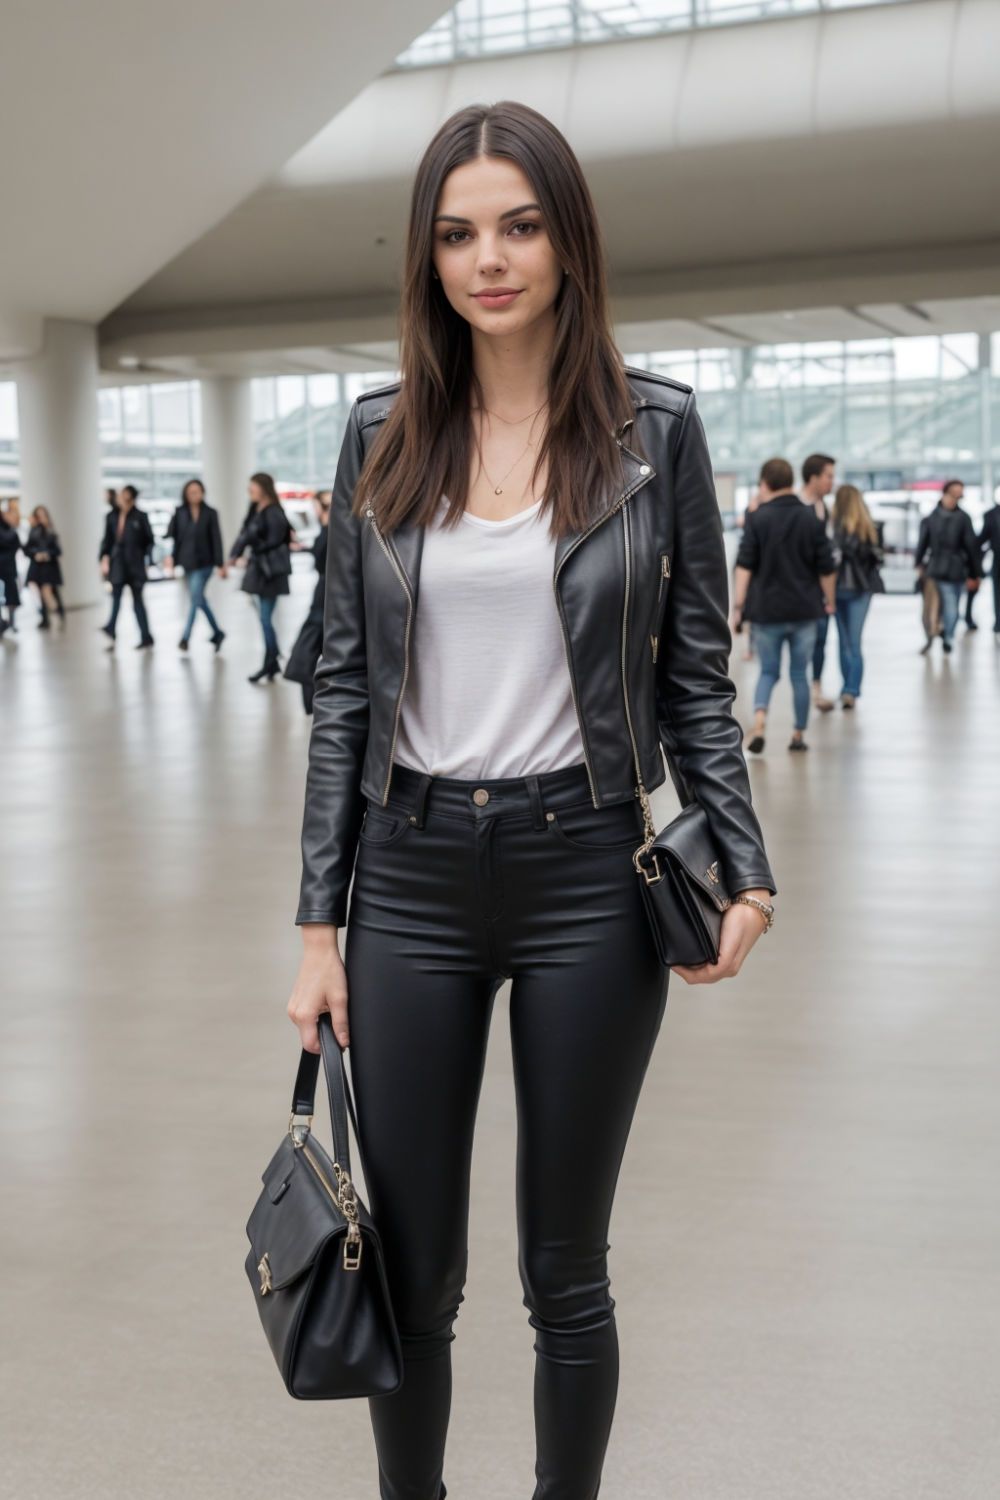 sleek leather jacket pairing travel outfit